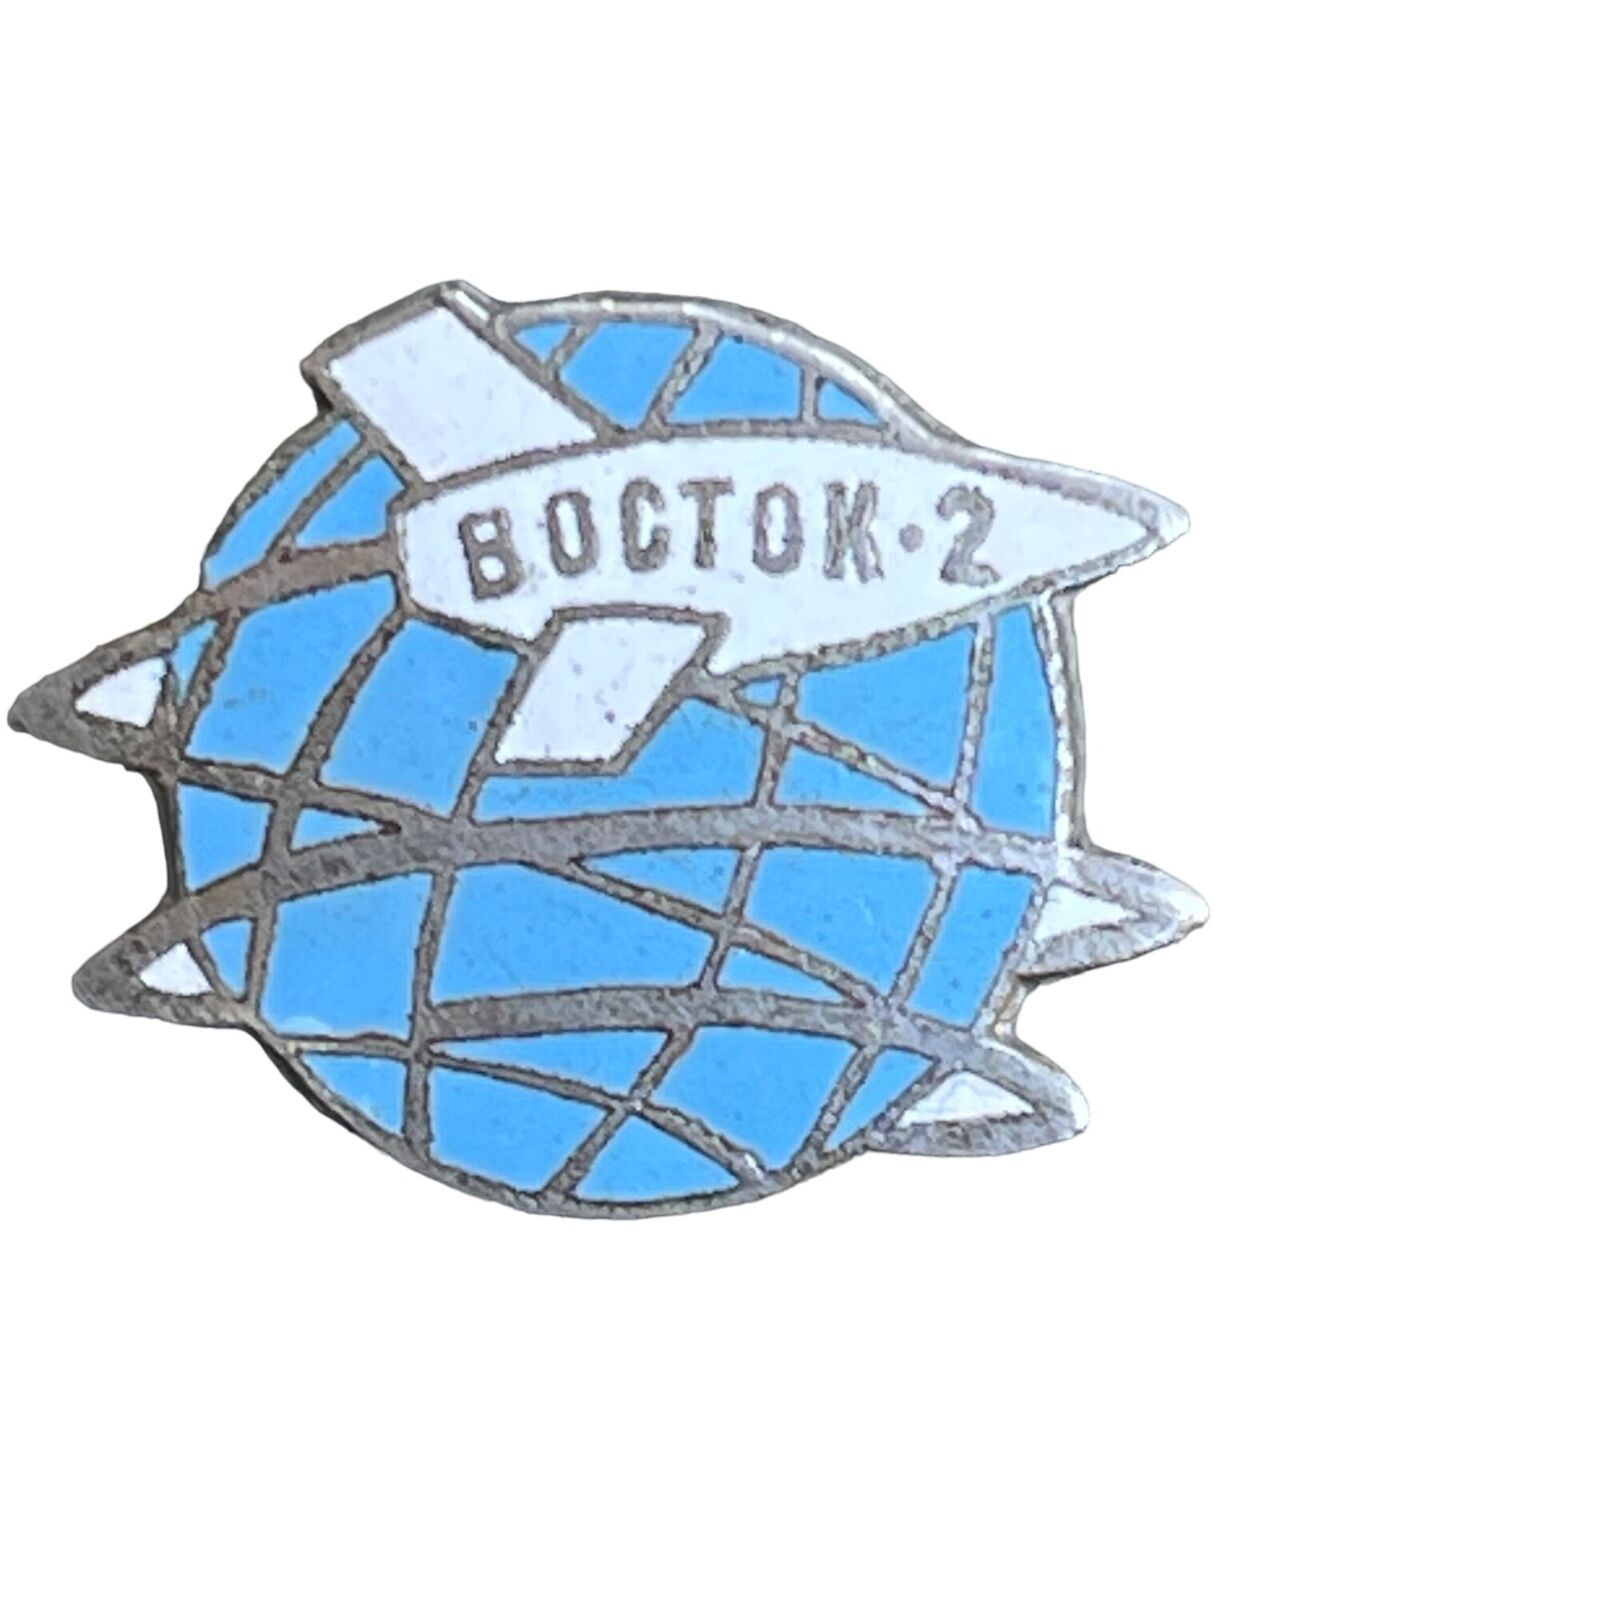 Vintage Soviet Space Program Vostok 2 Enamel Pin Badge Collectible USSR Space Me